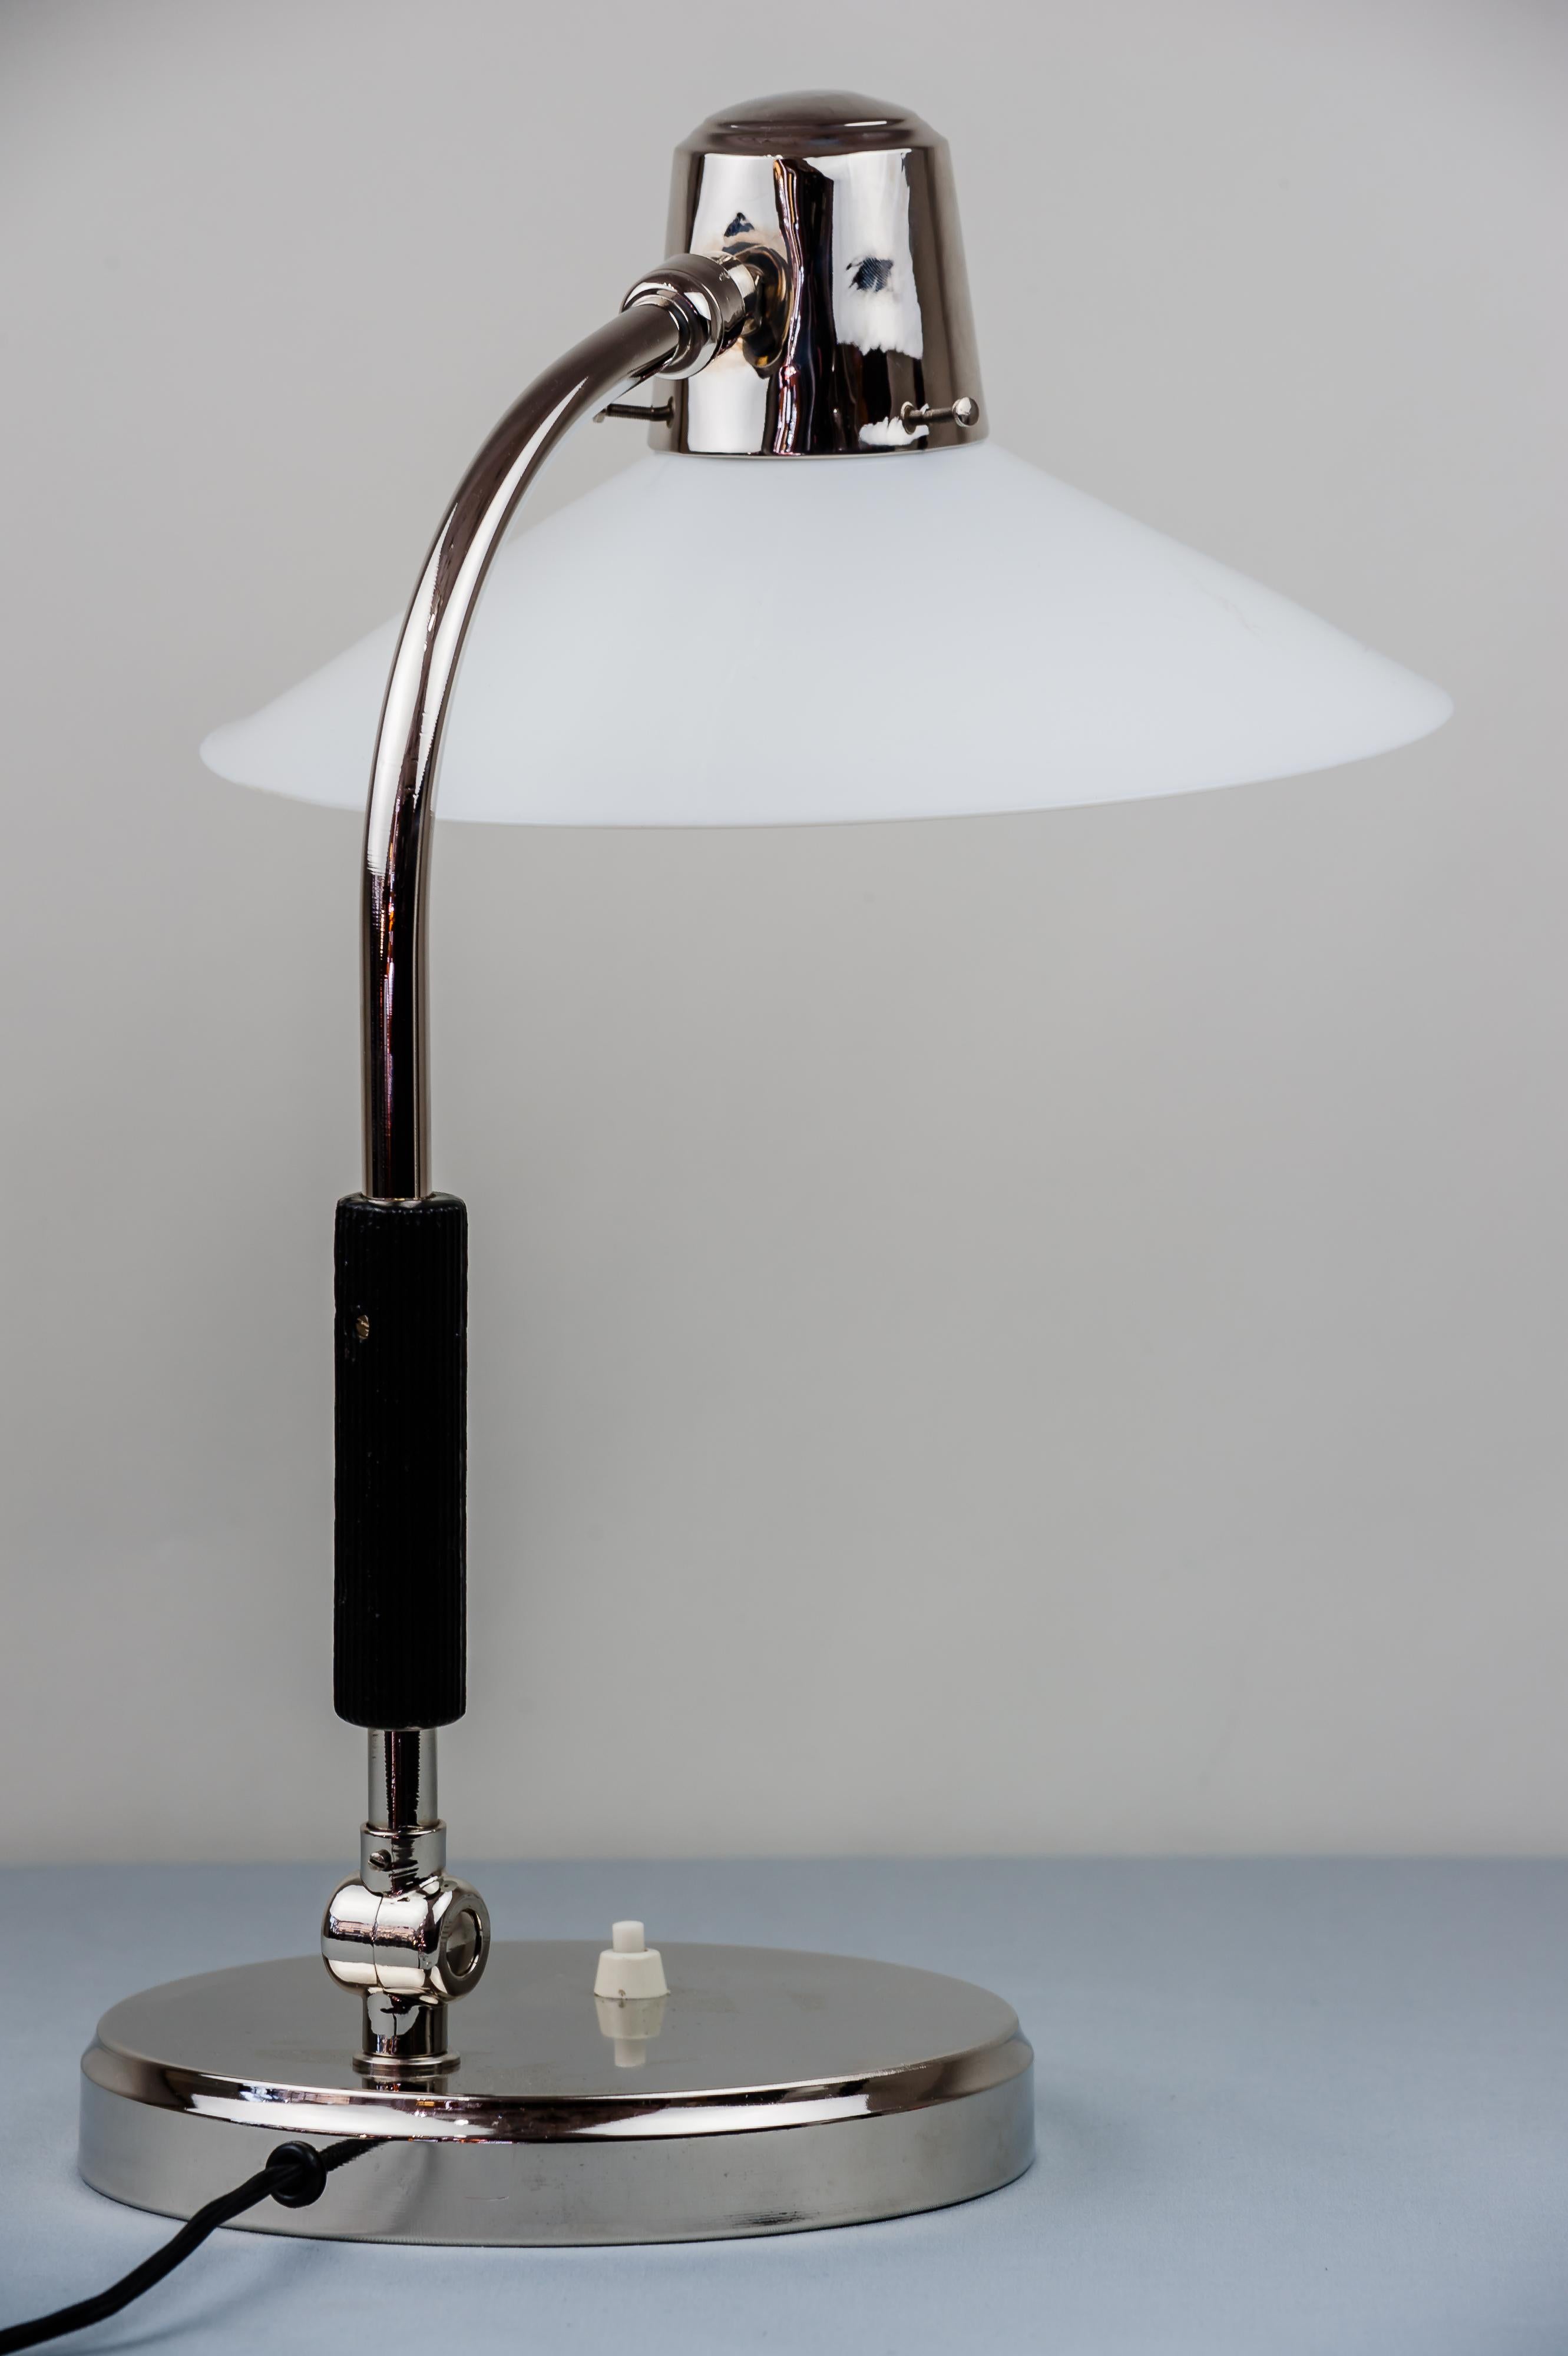 Swiveling nickel table lamp around 1920s with original glass
Wood handle.